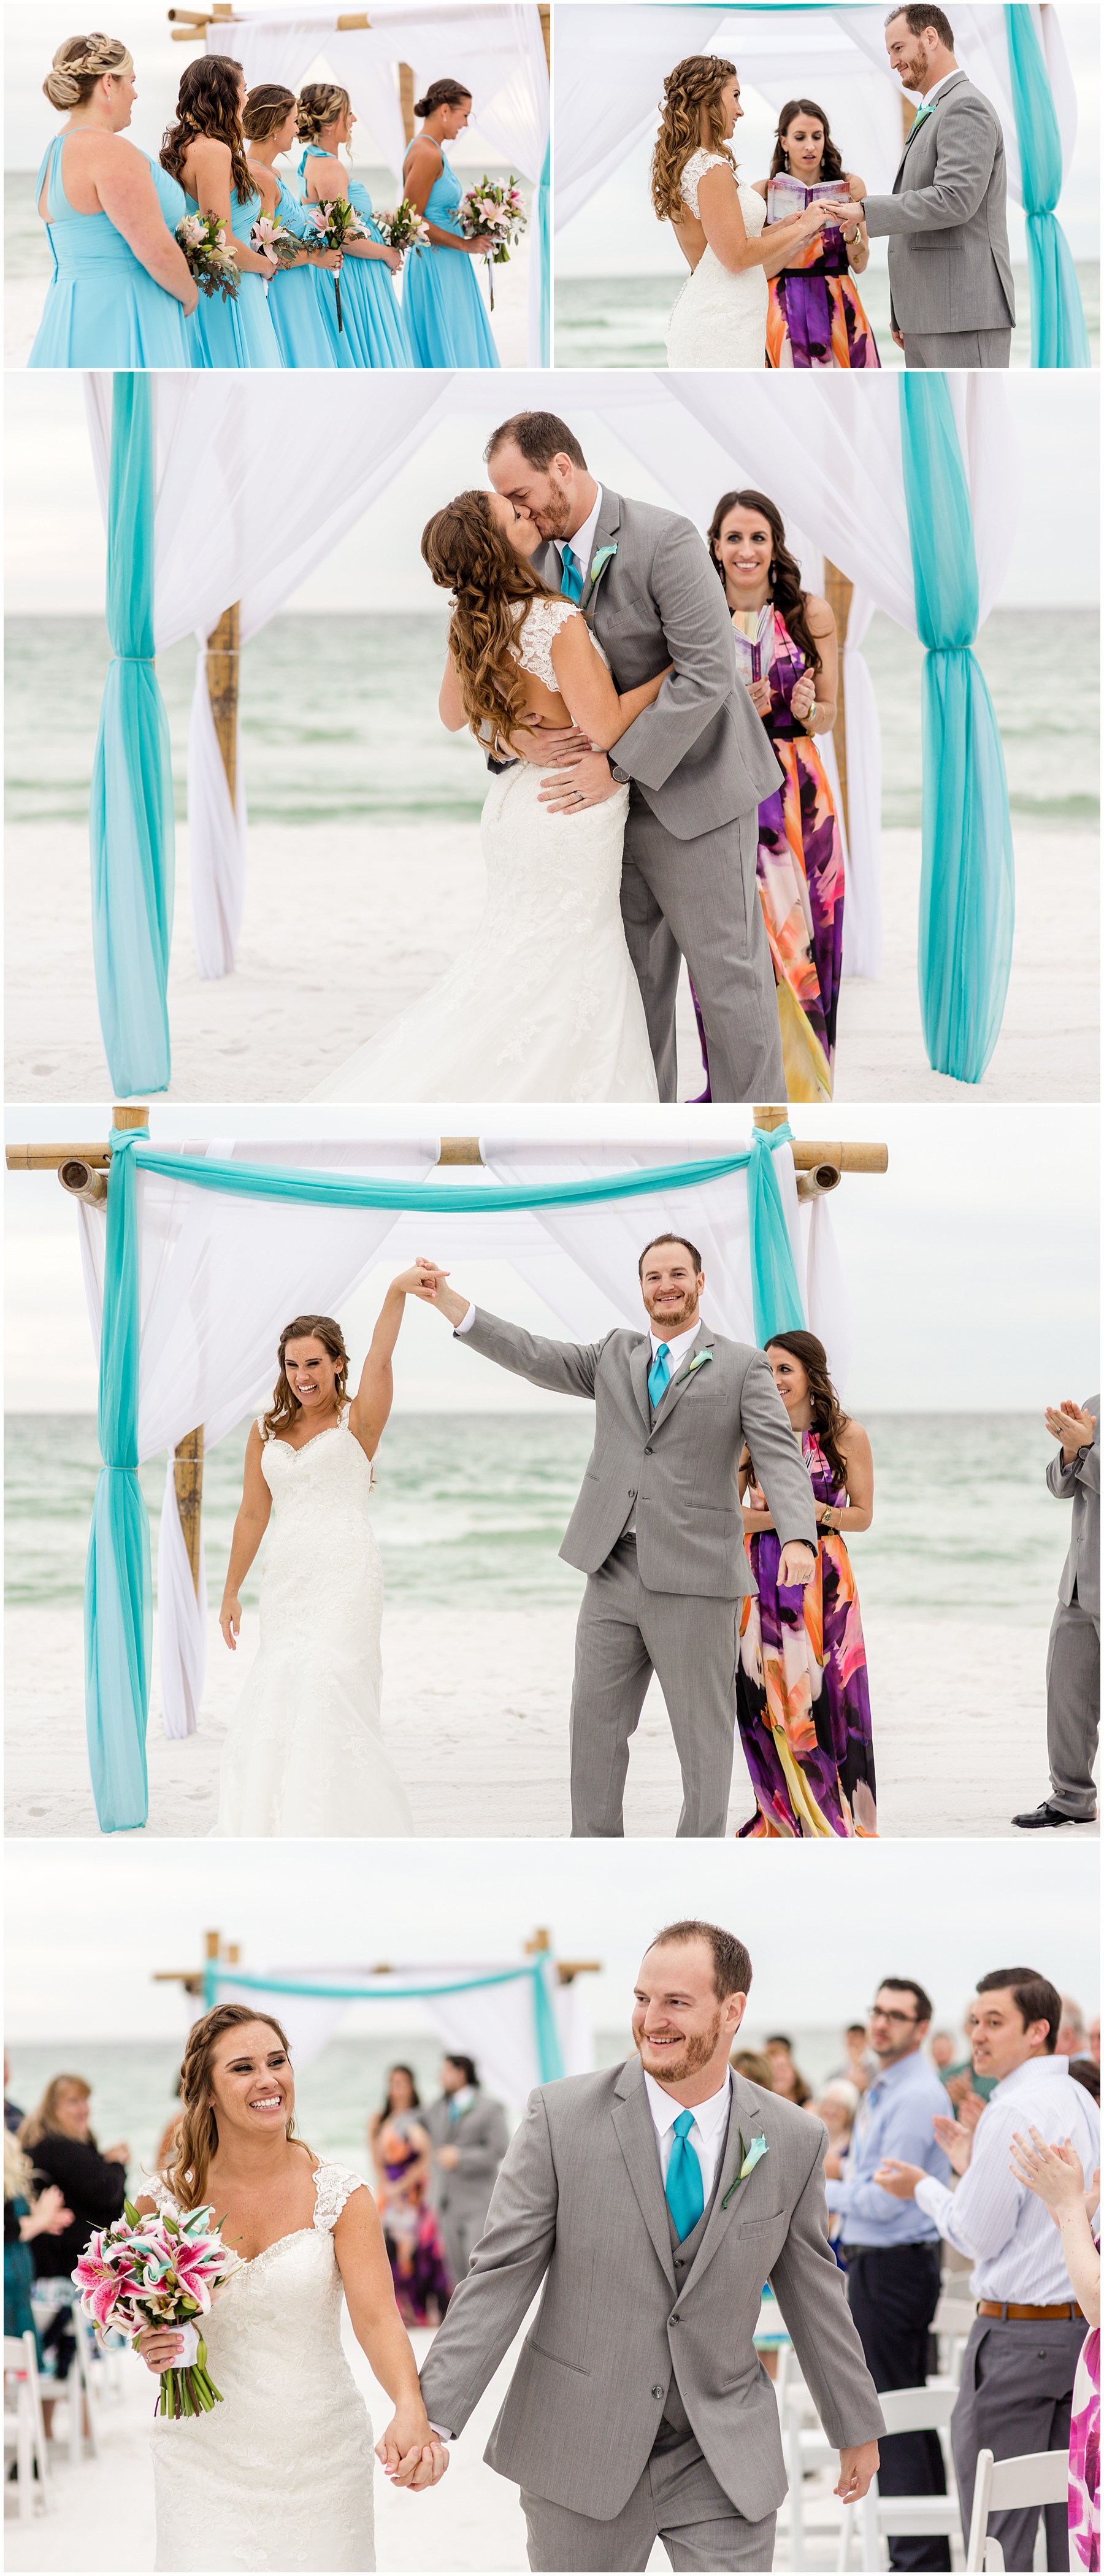 Wedding Ceremony on the beach in Destin, FL